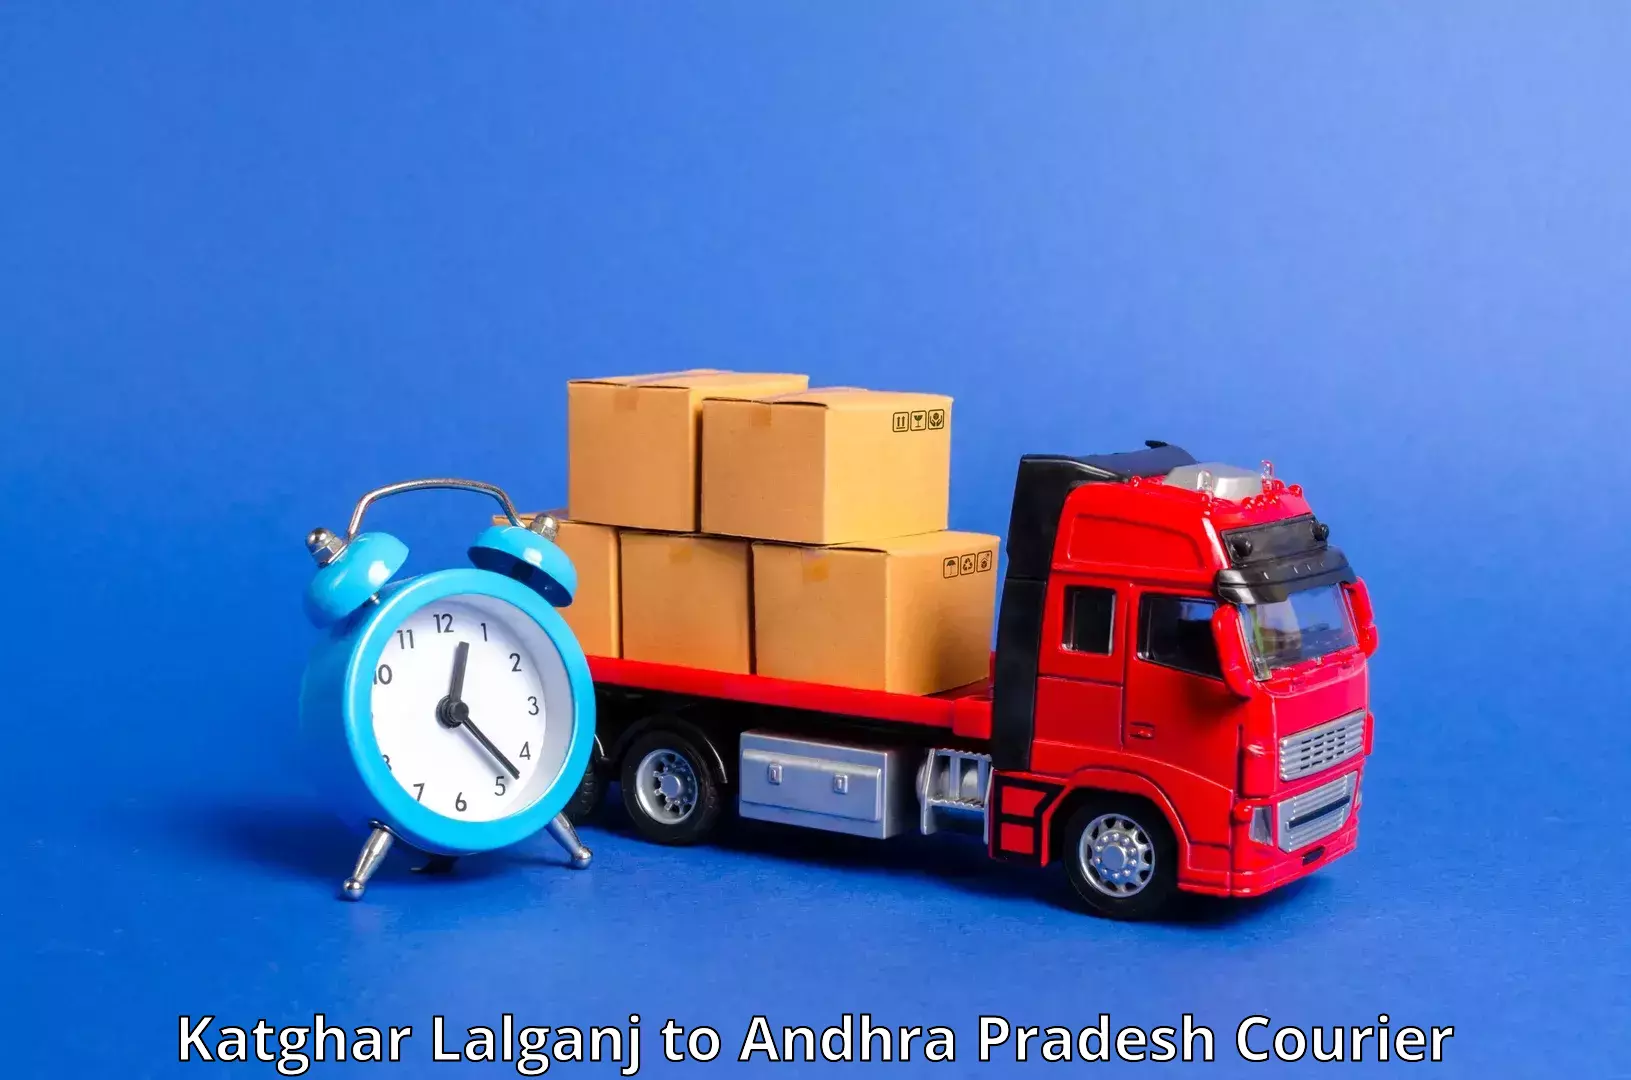 Multi-national courier services Katghar Lalganj to Tekkali